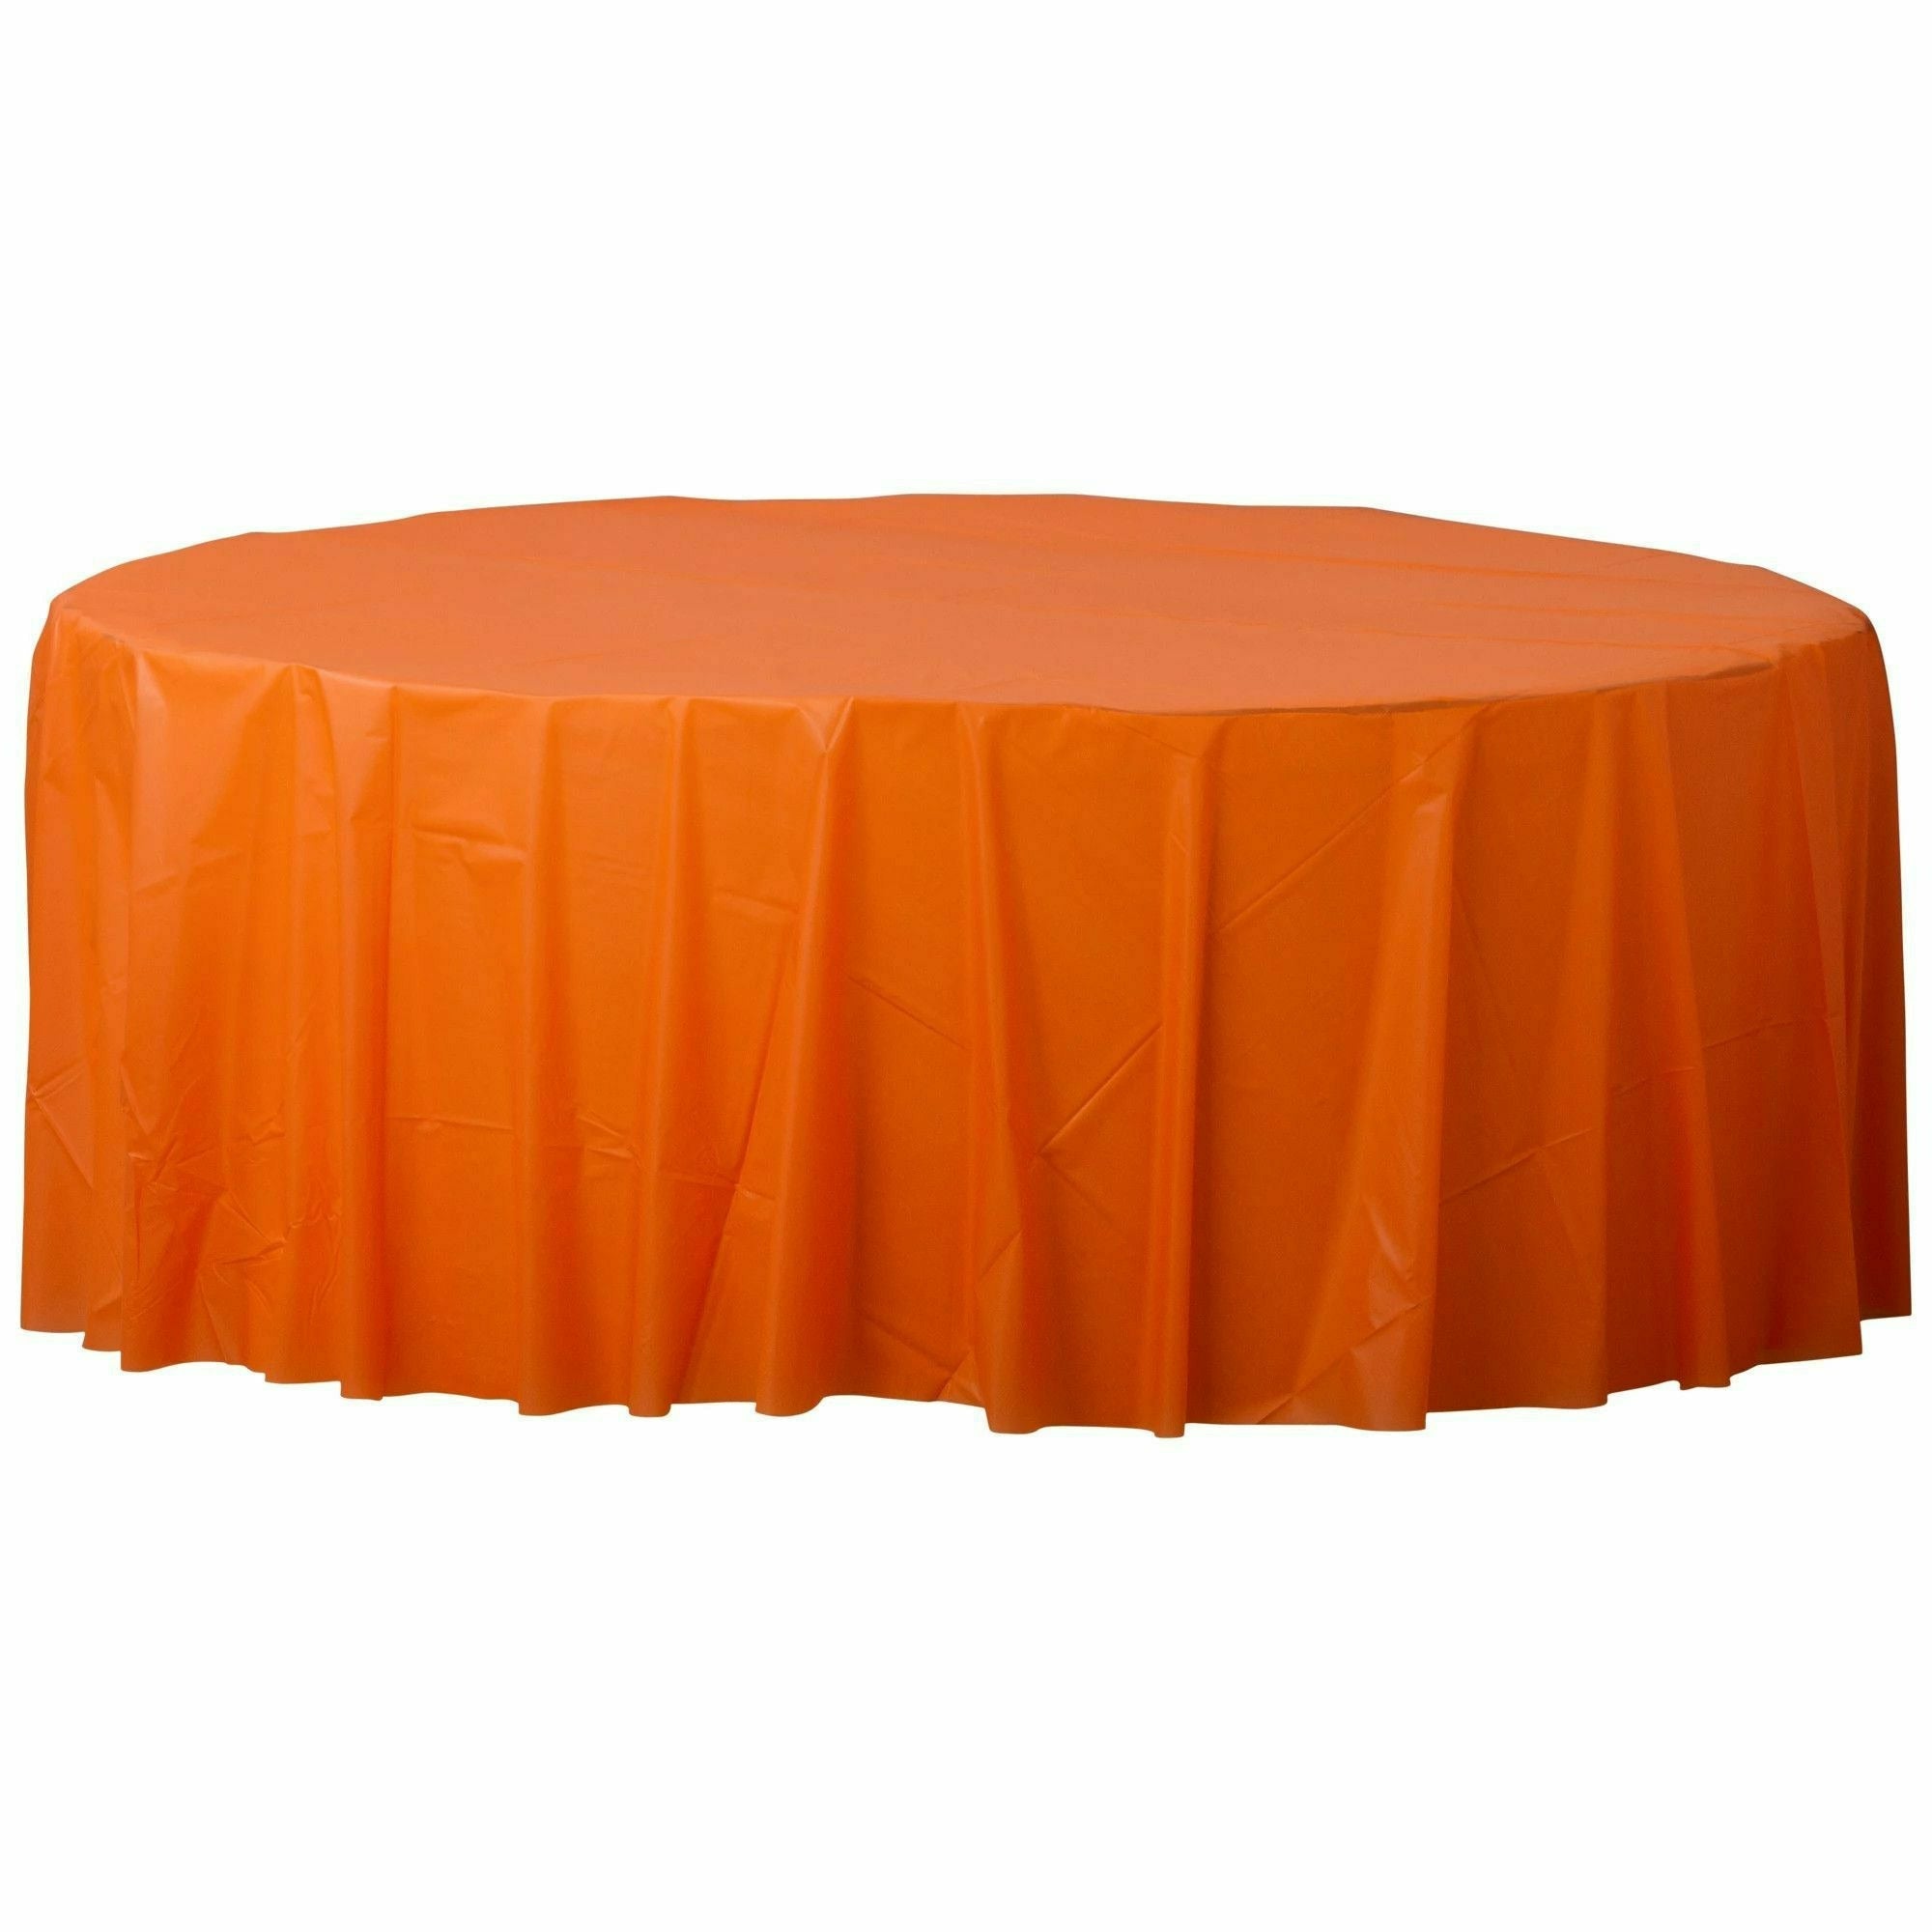 Amscan BASIC Orange Peel - 84" Round Plastic Table Cover